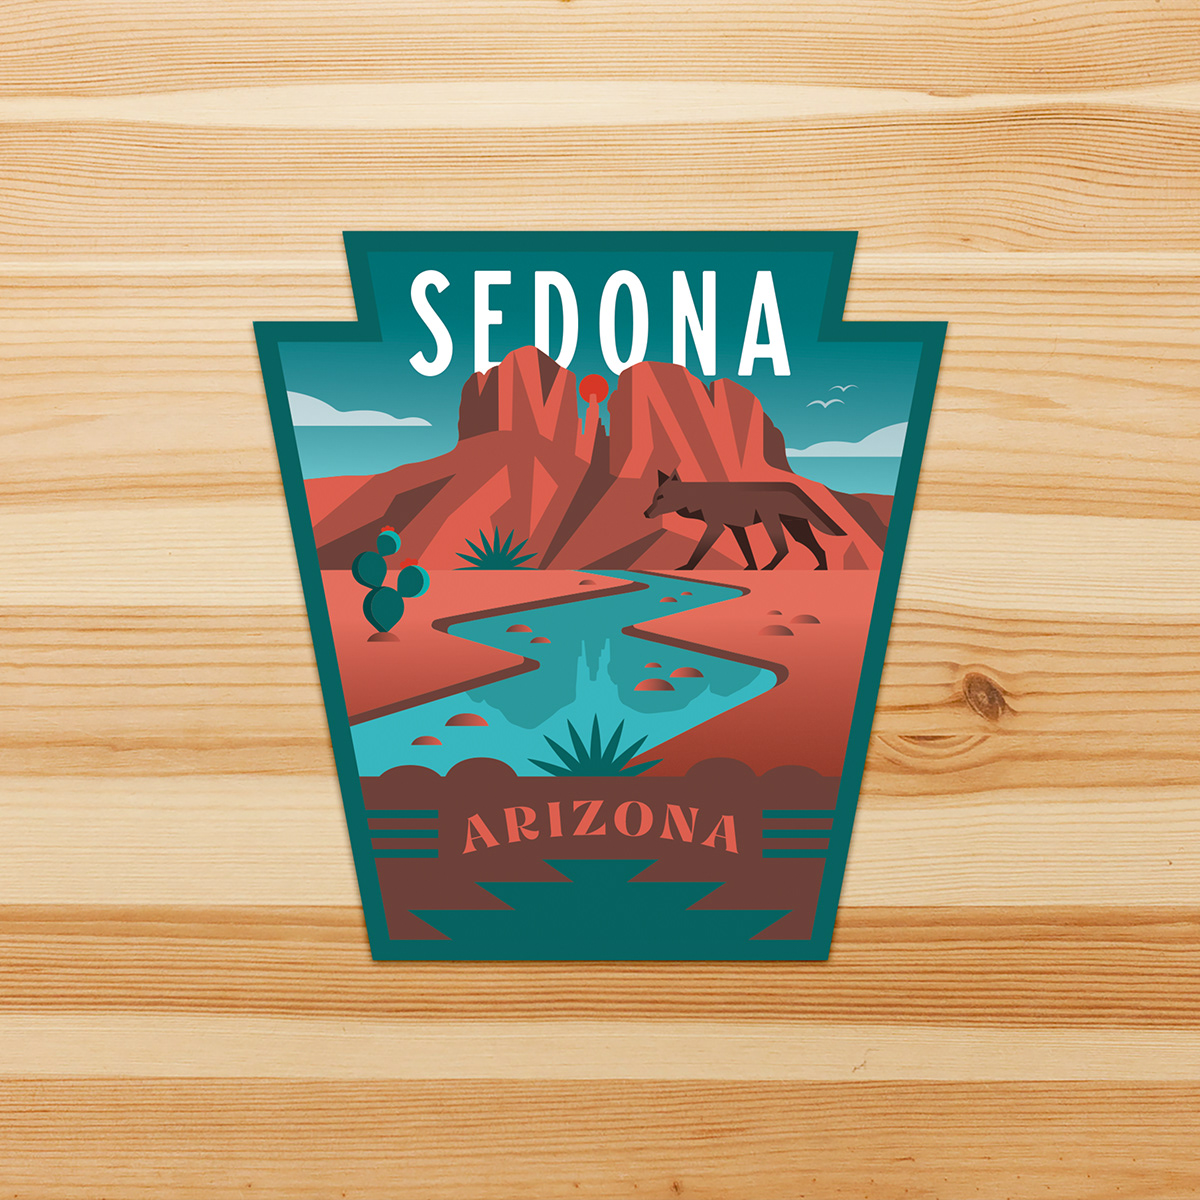 adobe illustrator arizona arizona illustration hiking Nature outdoors sticker Sedona sedona arizona sticker vinyl sticker